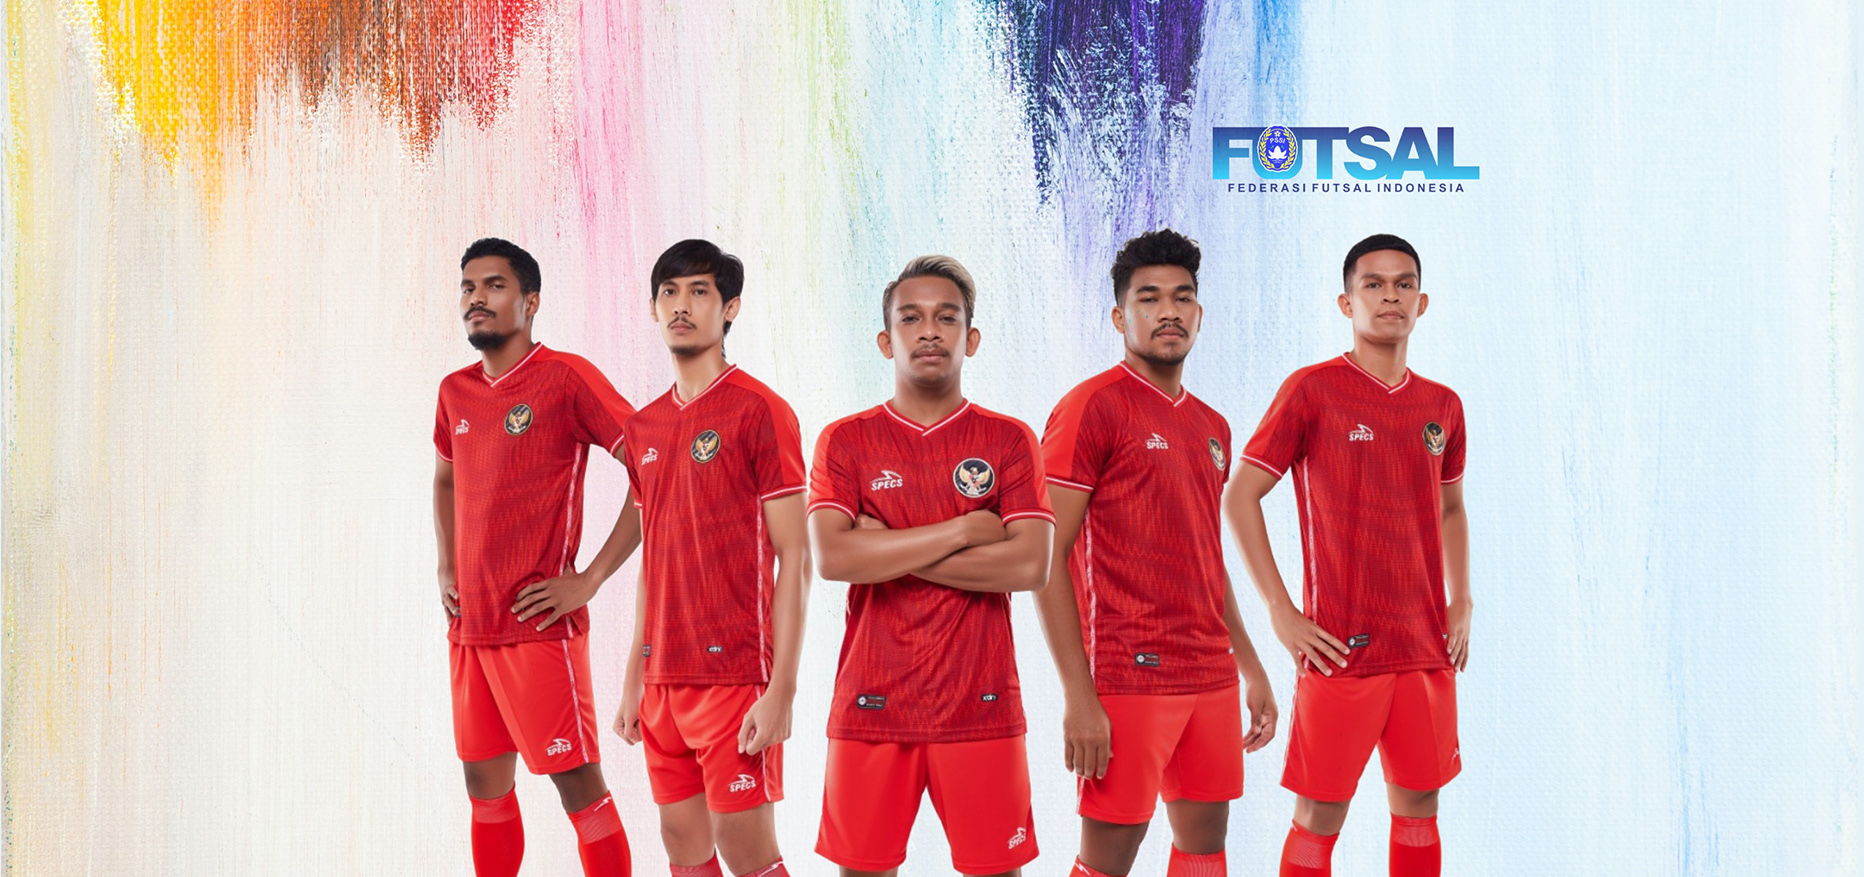 Federasi Futsal Indonesia - Gagal Tampil di Piala Dunia Futsal, Pelatih